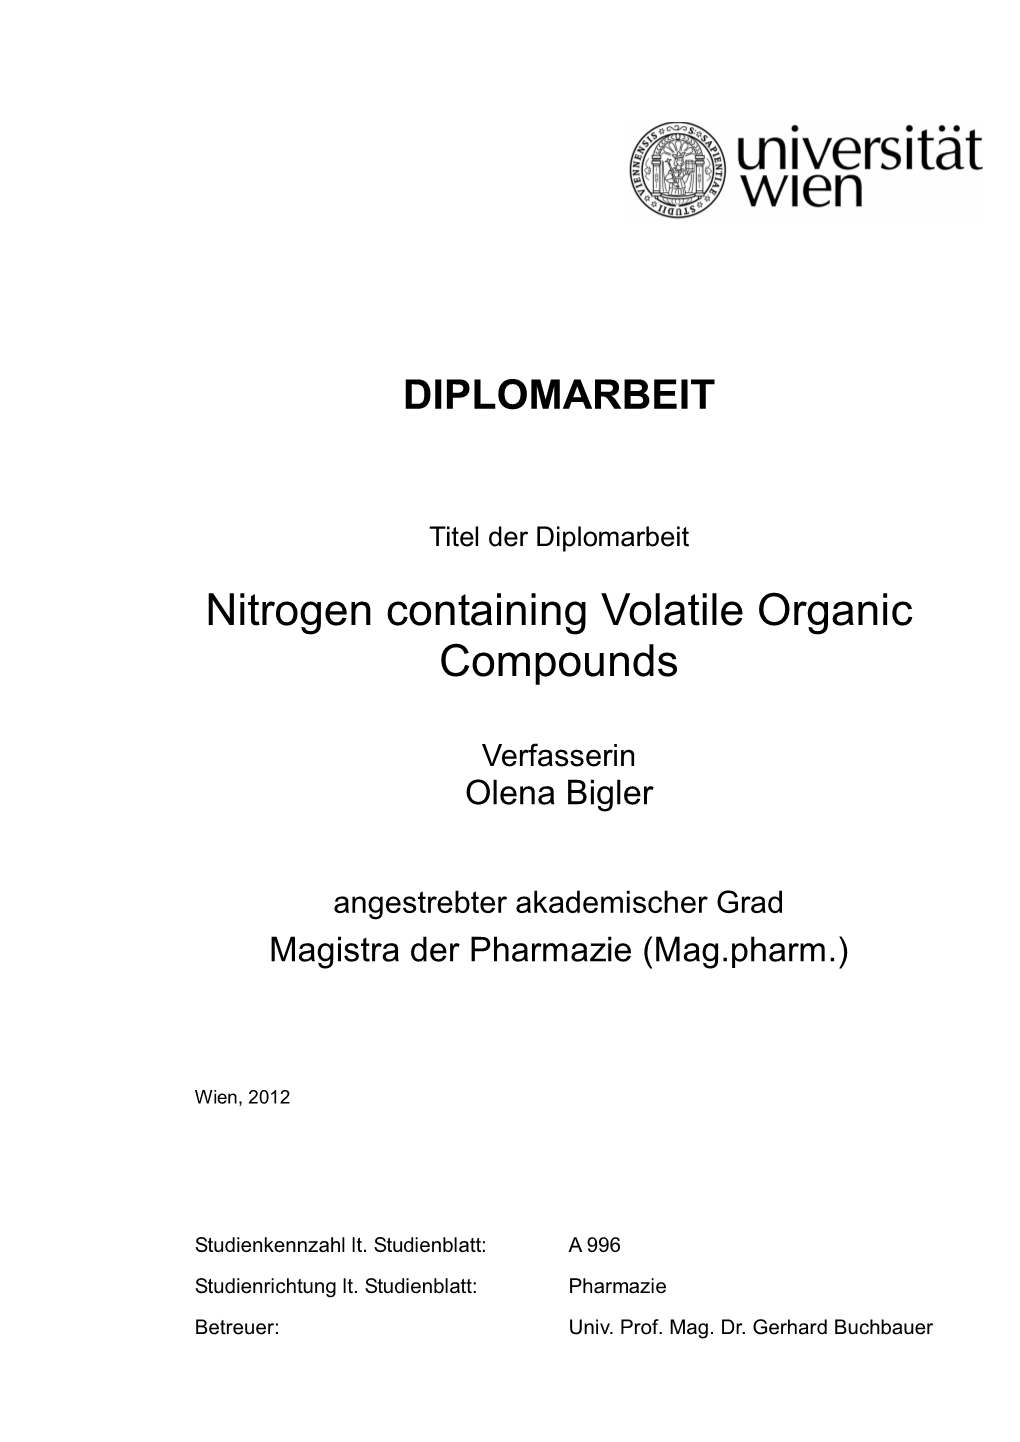 Nitrogen Containing Volatile Organic Compounds